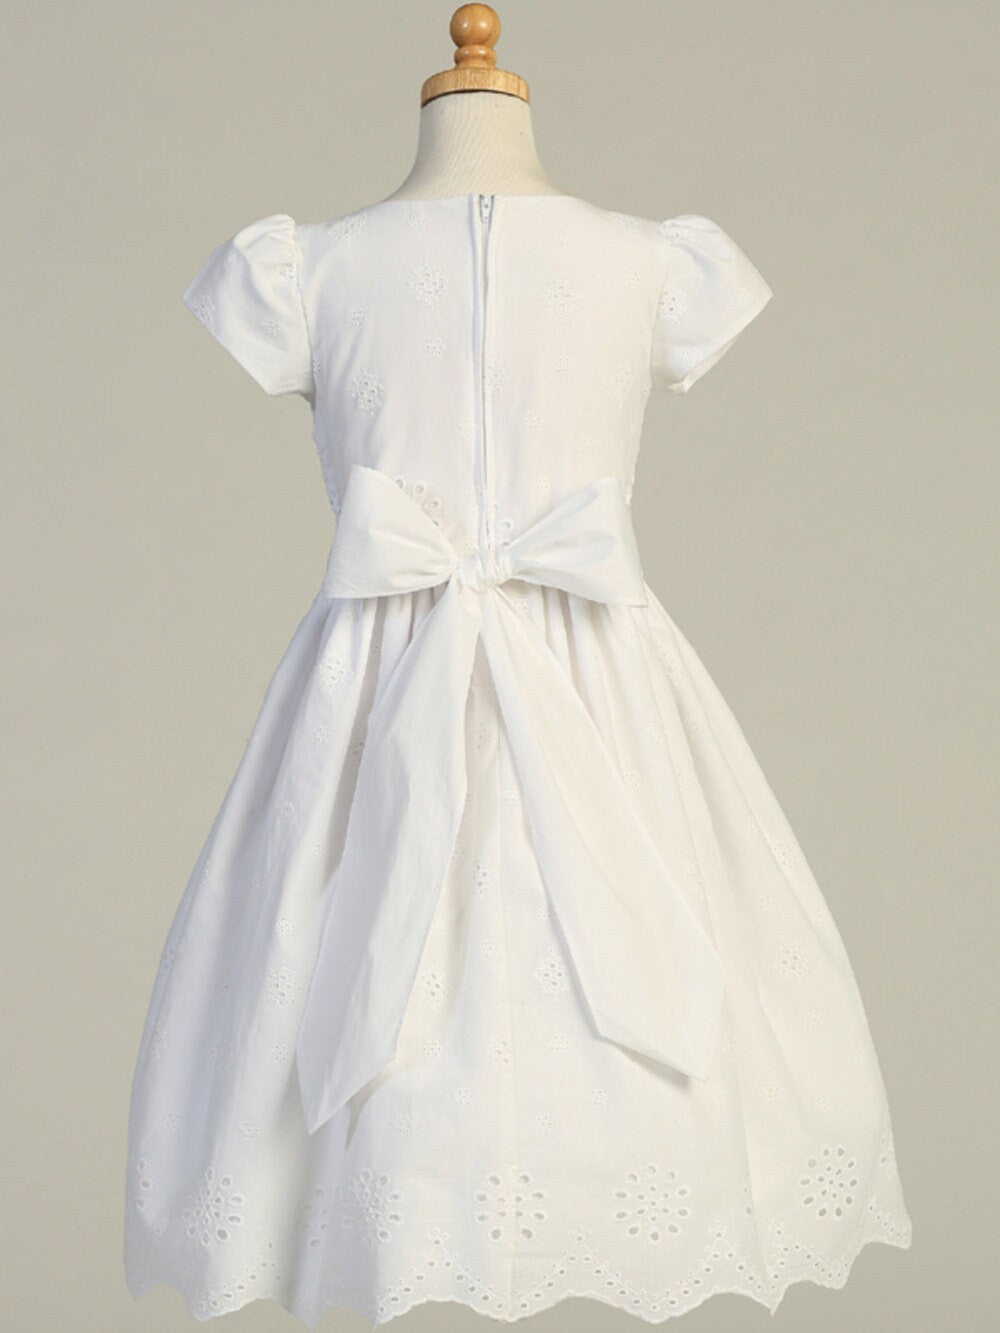 A view of the dress's tea-length hemline.